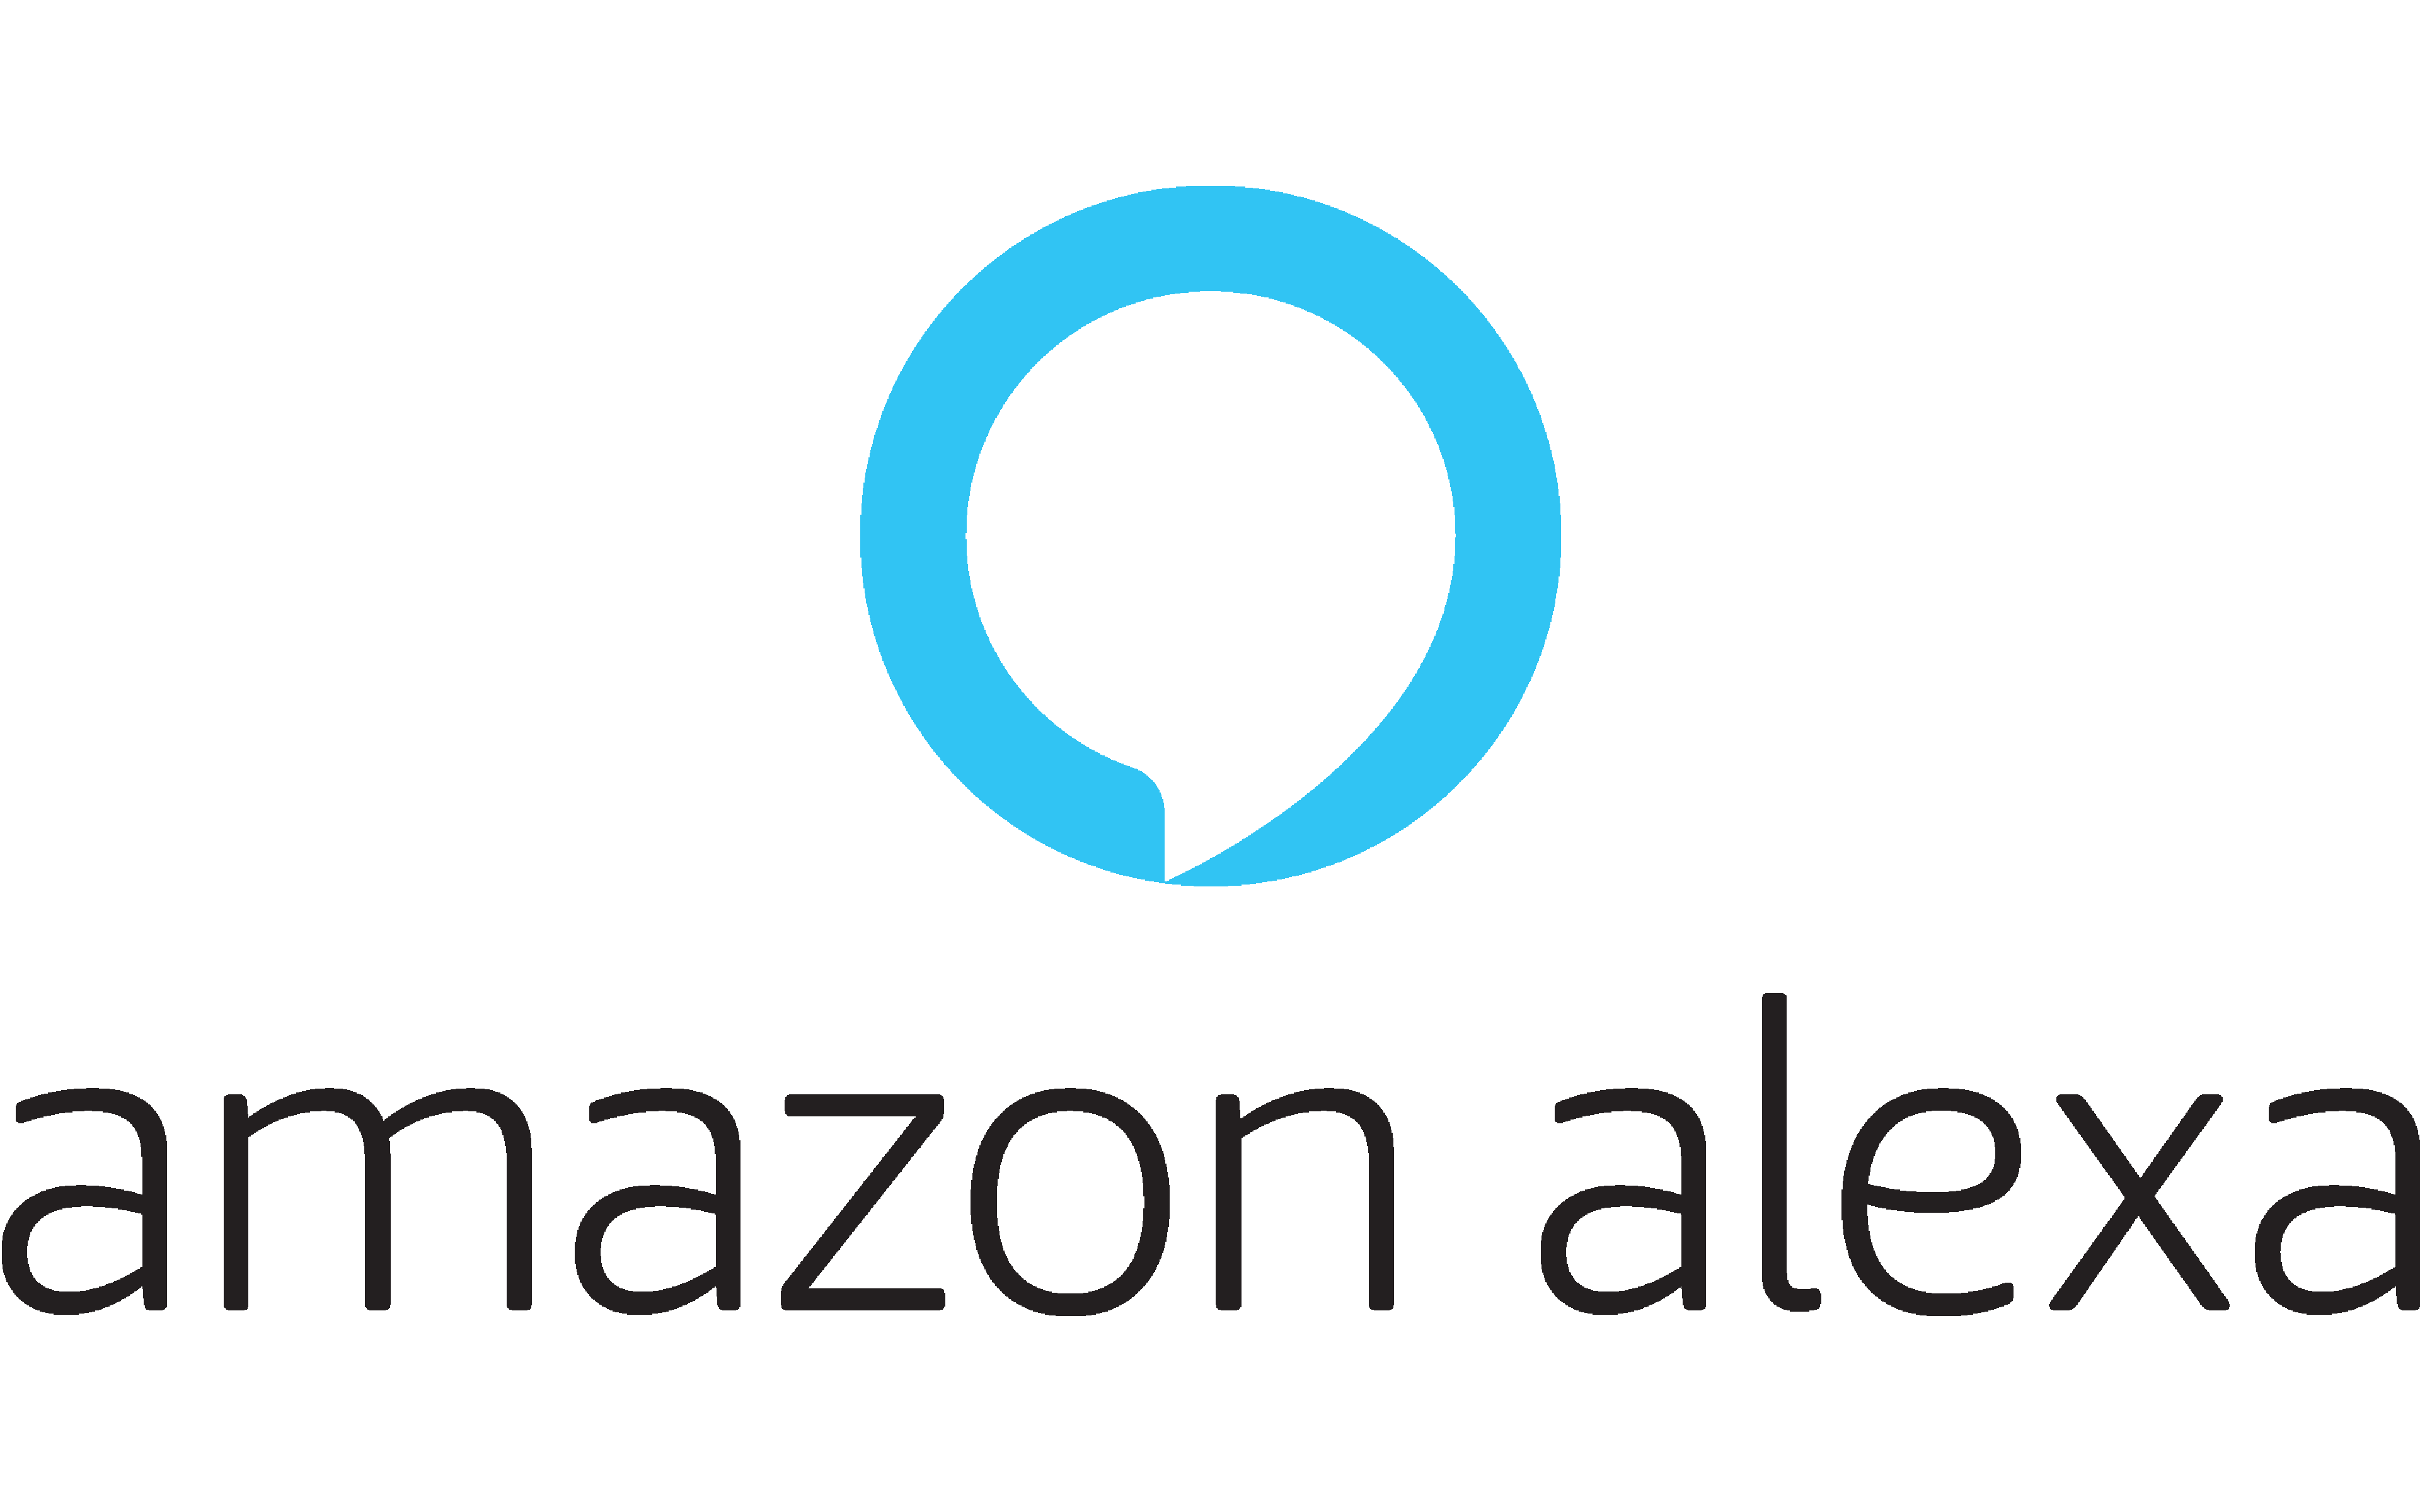 Free Alexa Logo Icon - Download in Flat Style